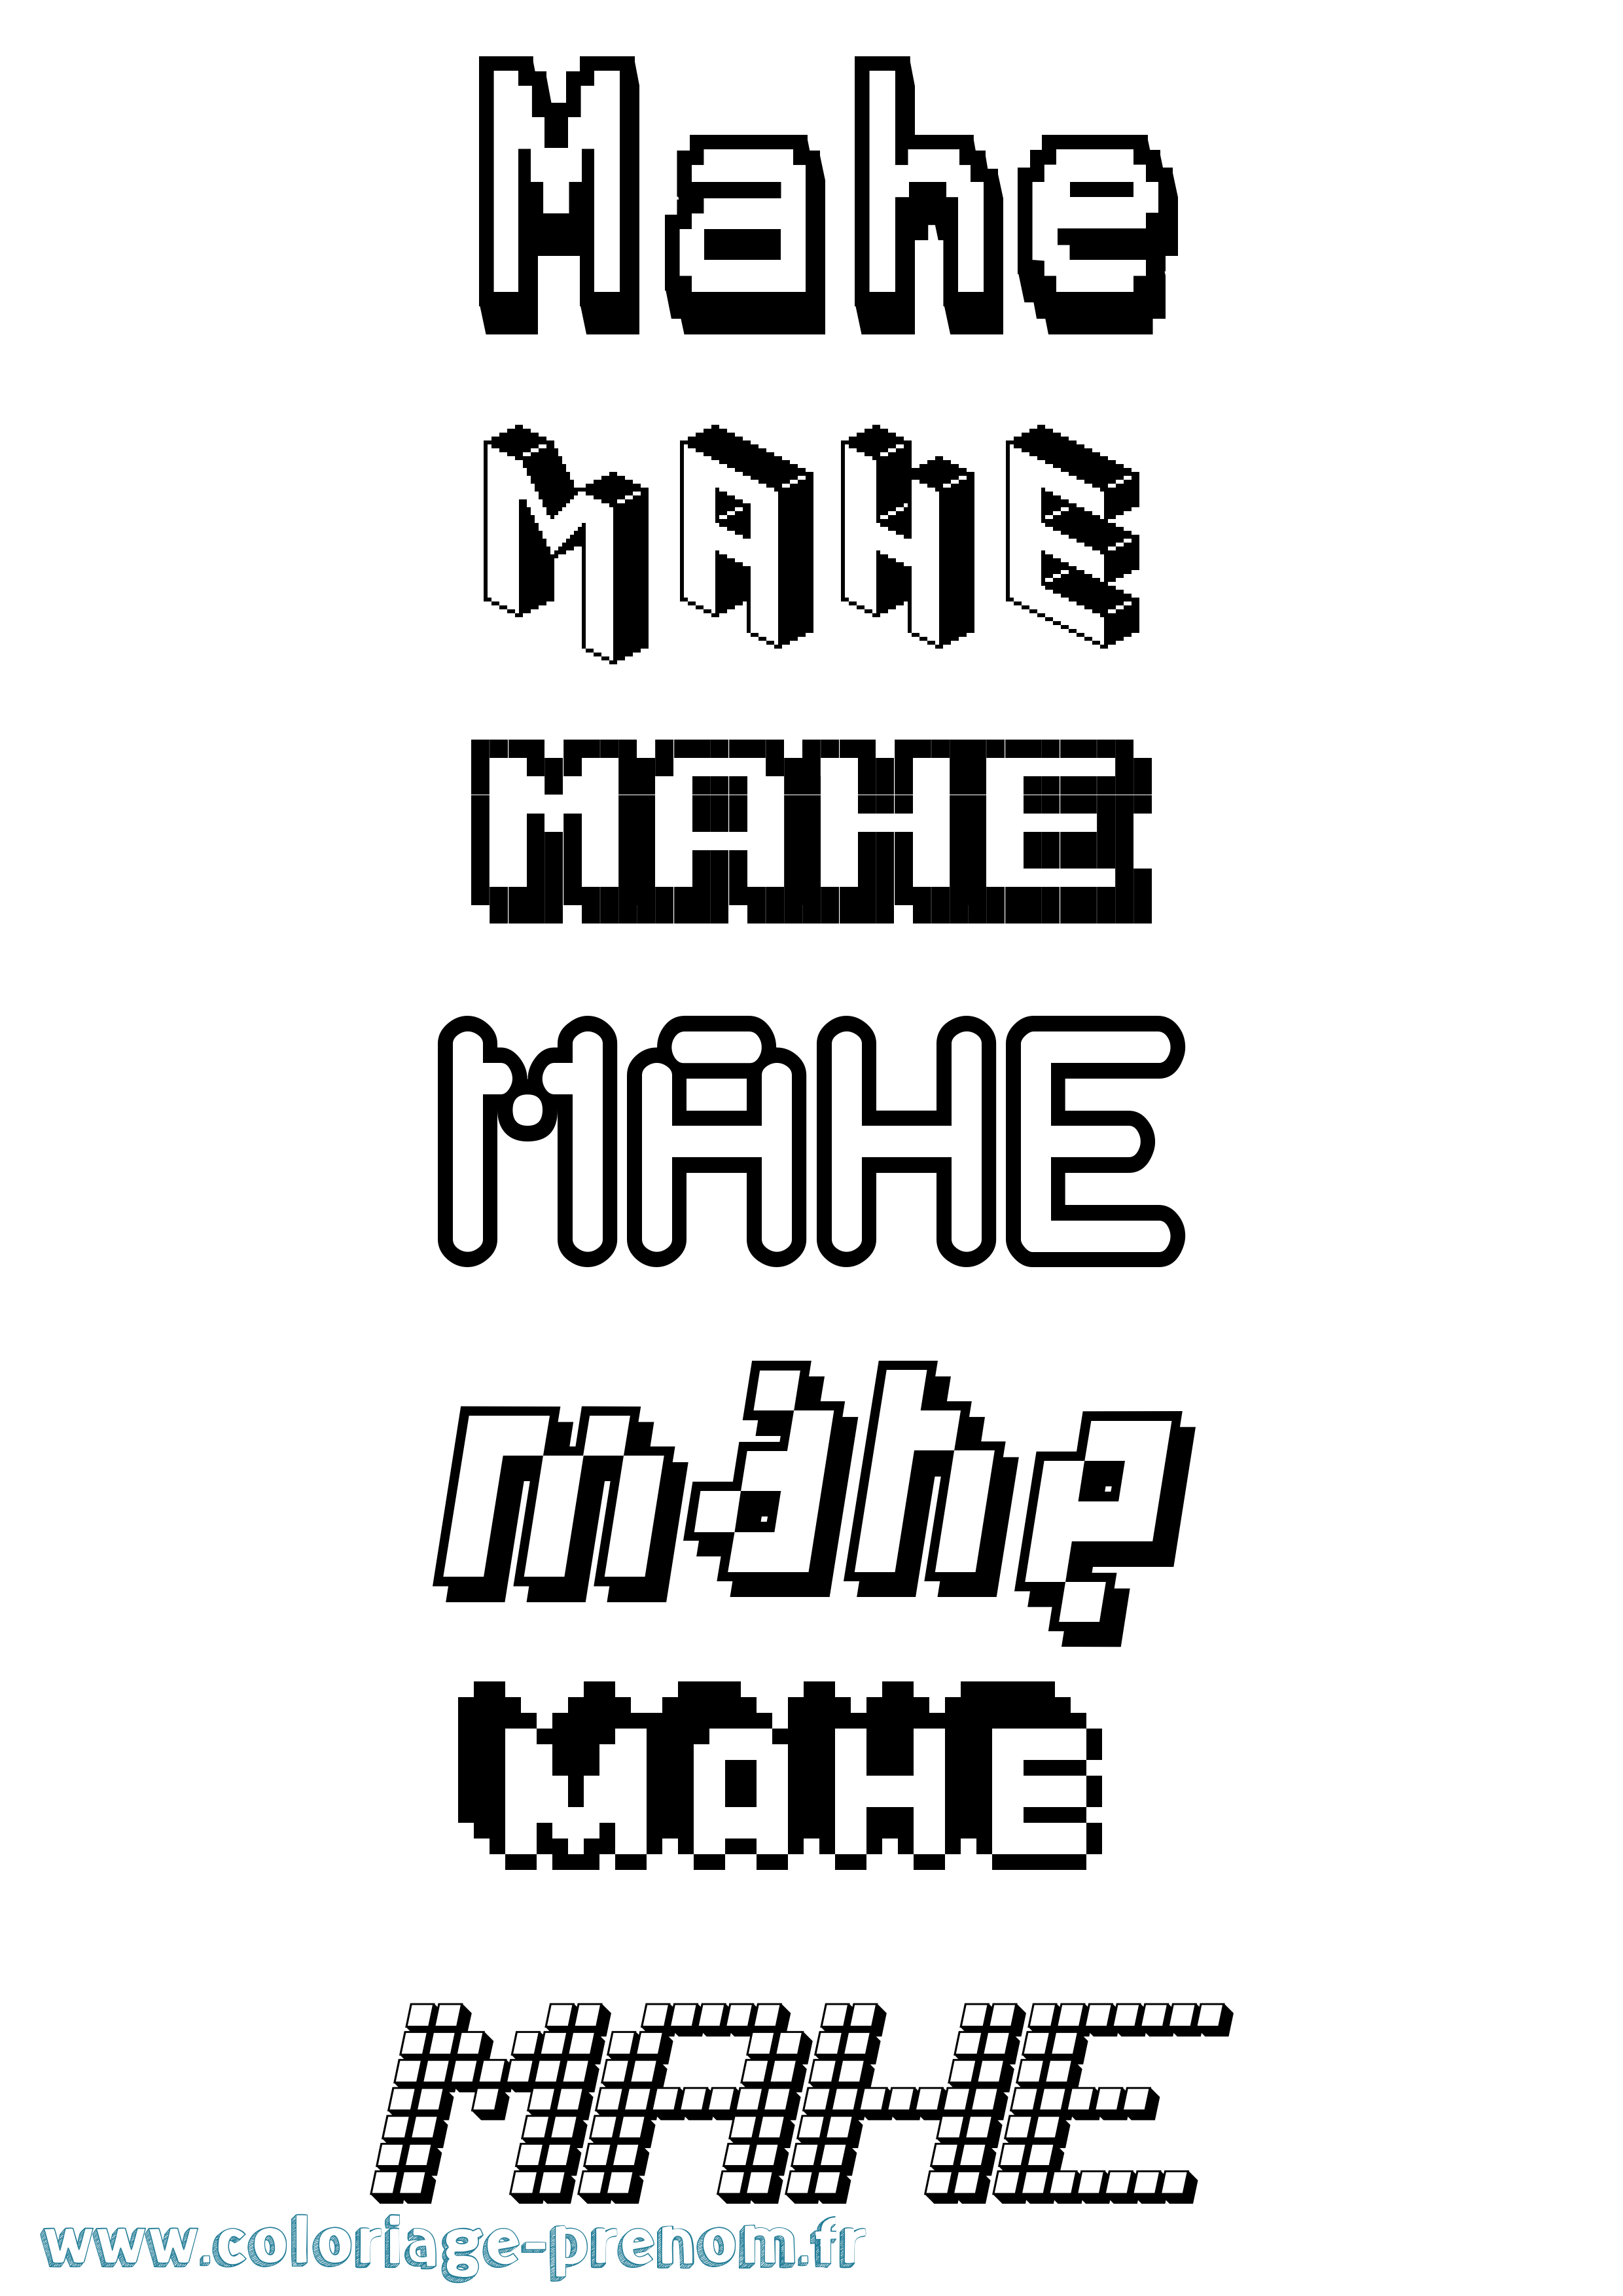 Coloriage prénom Mahe Pixel